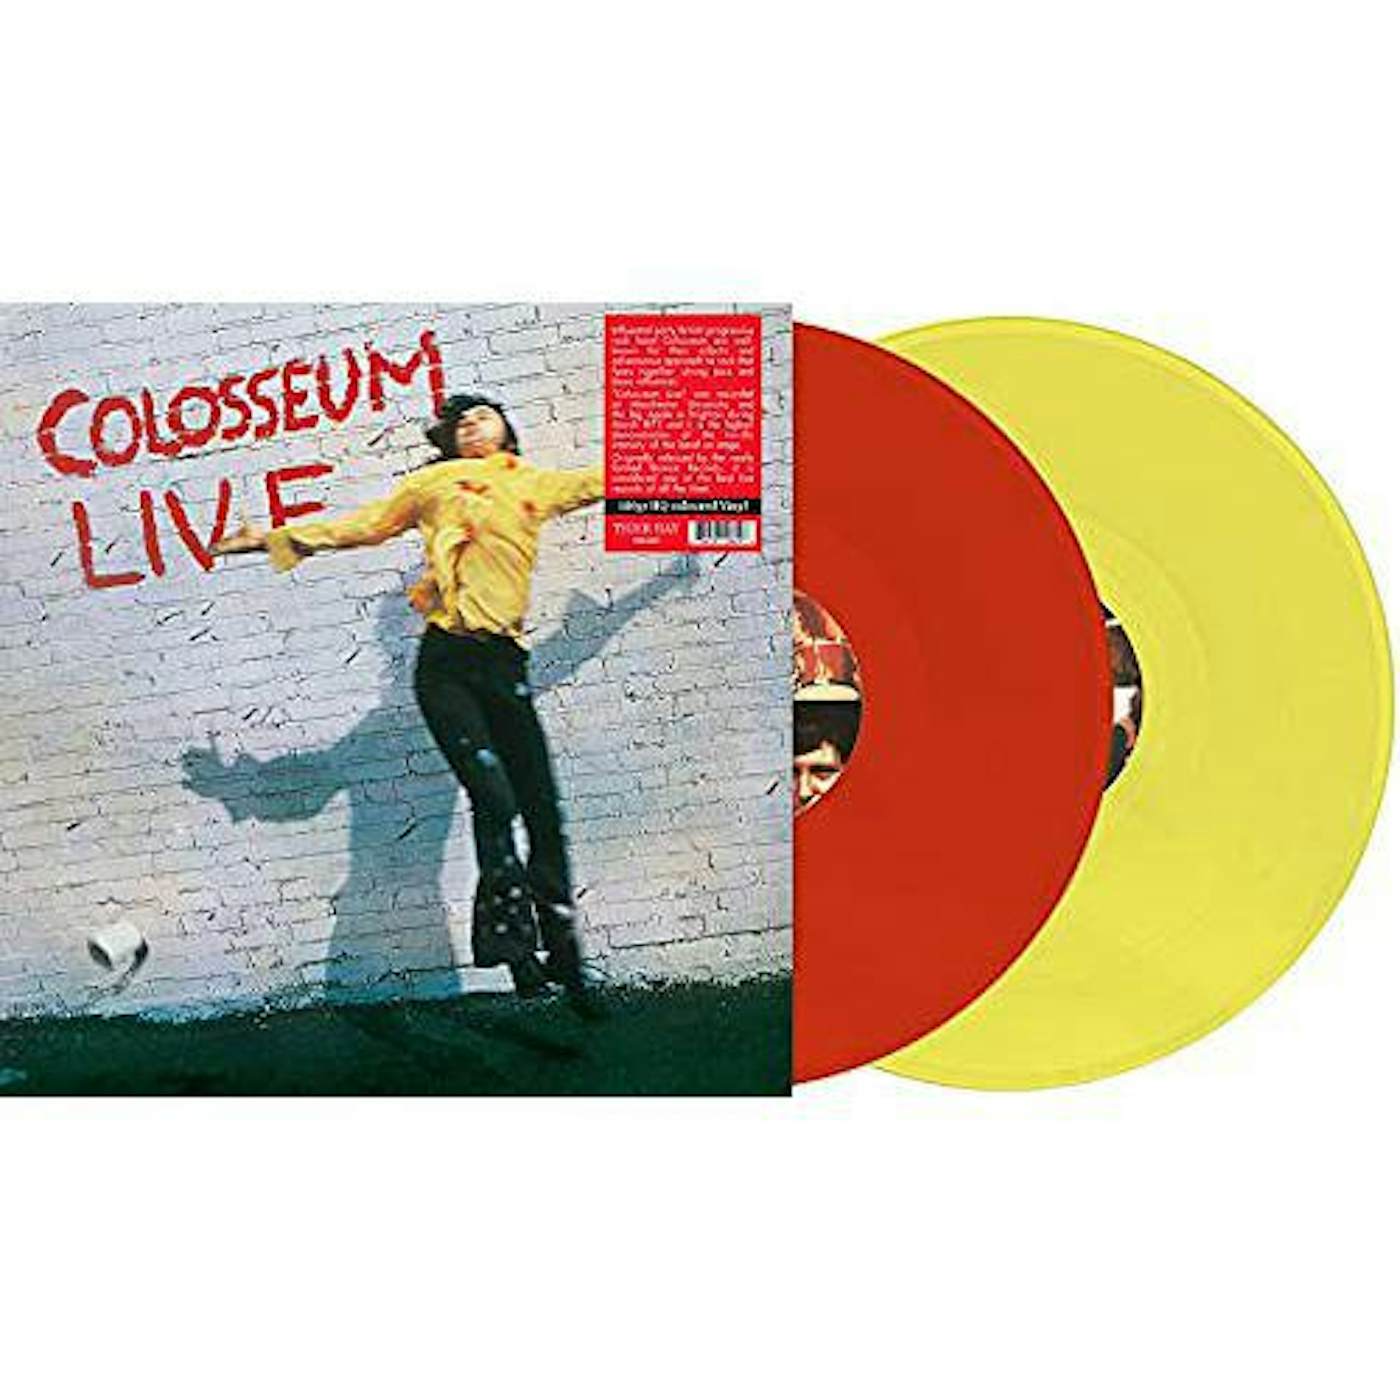 Colosseum LIVE (2LP/RED & YELLOW VINYL) Vinyl Record